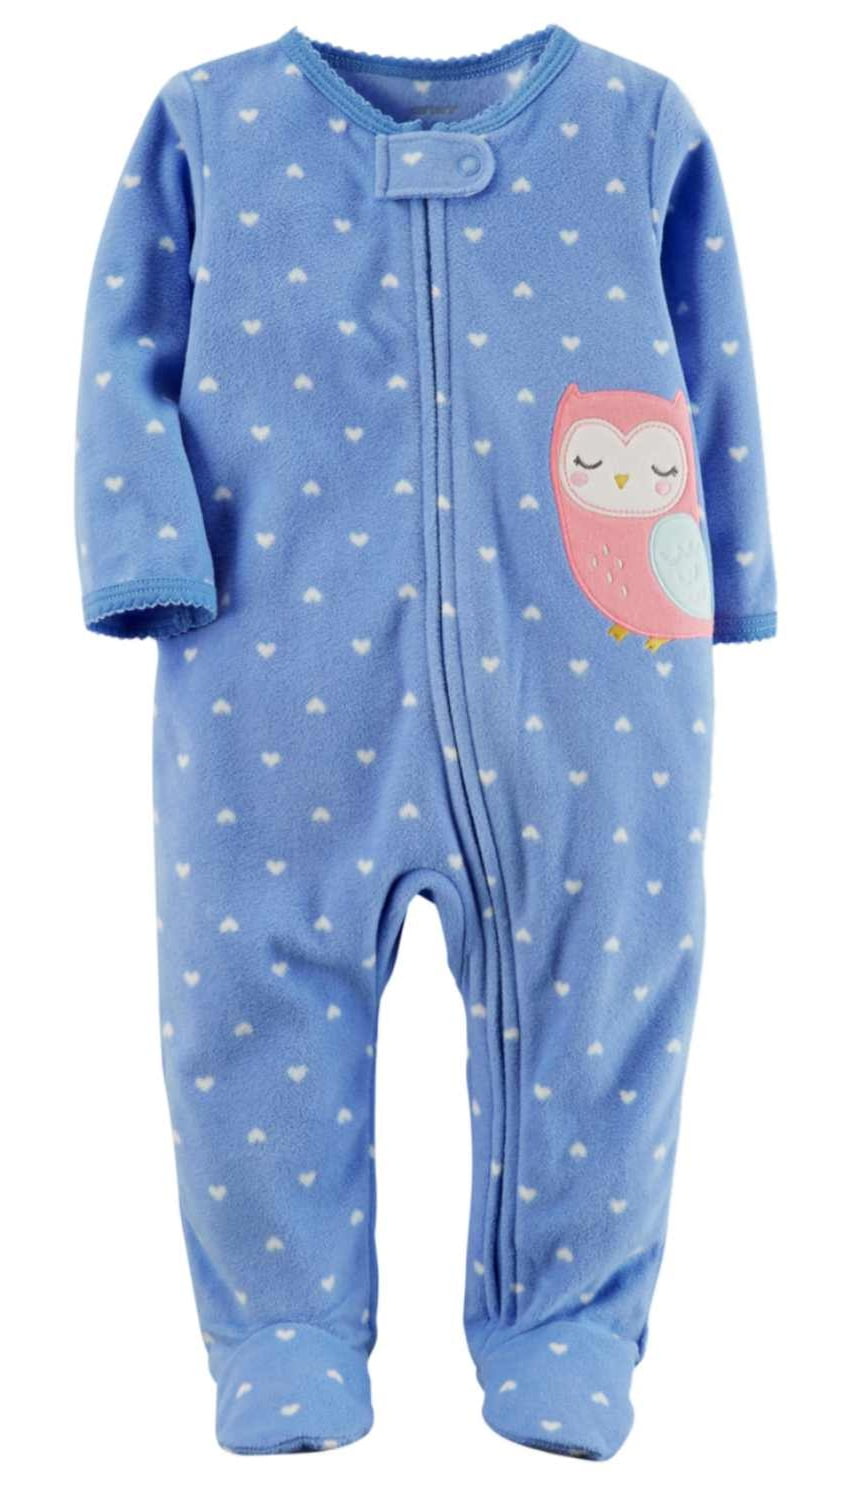 Carter's Carters Infant Girls Blue Fleece Heart Owl Sleeper Footie Pajama Sleep & Play